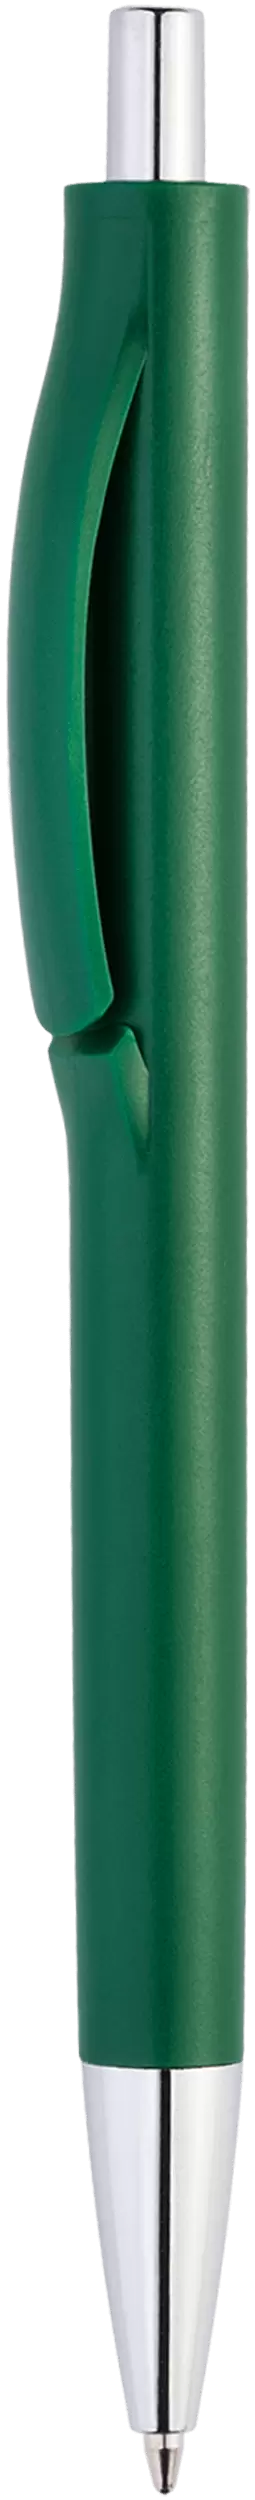 Ручка IGLA CHROME Зеленая 1032-02